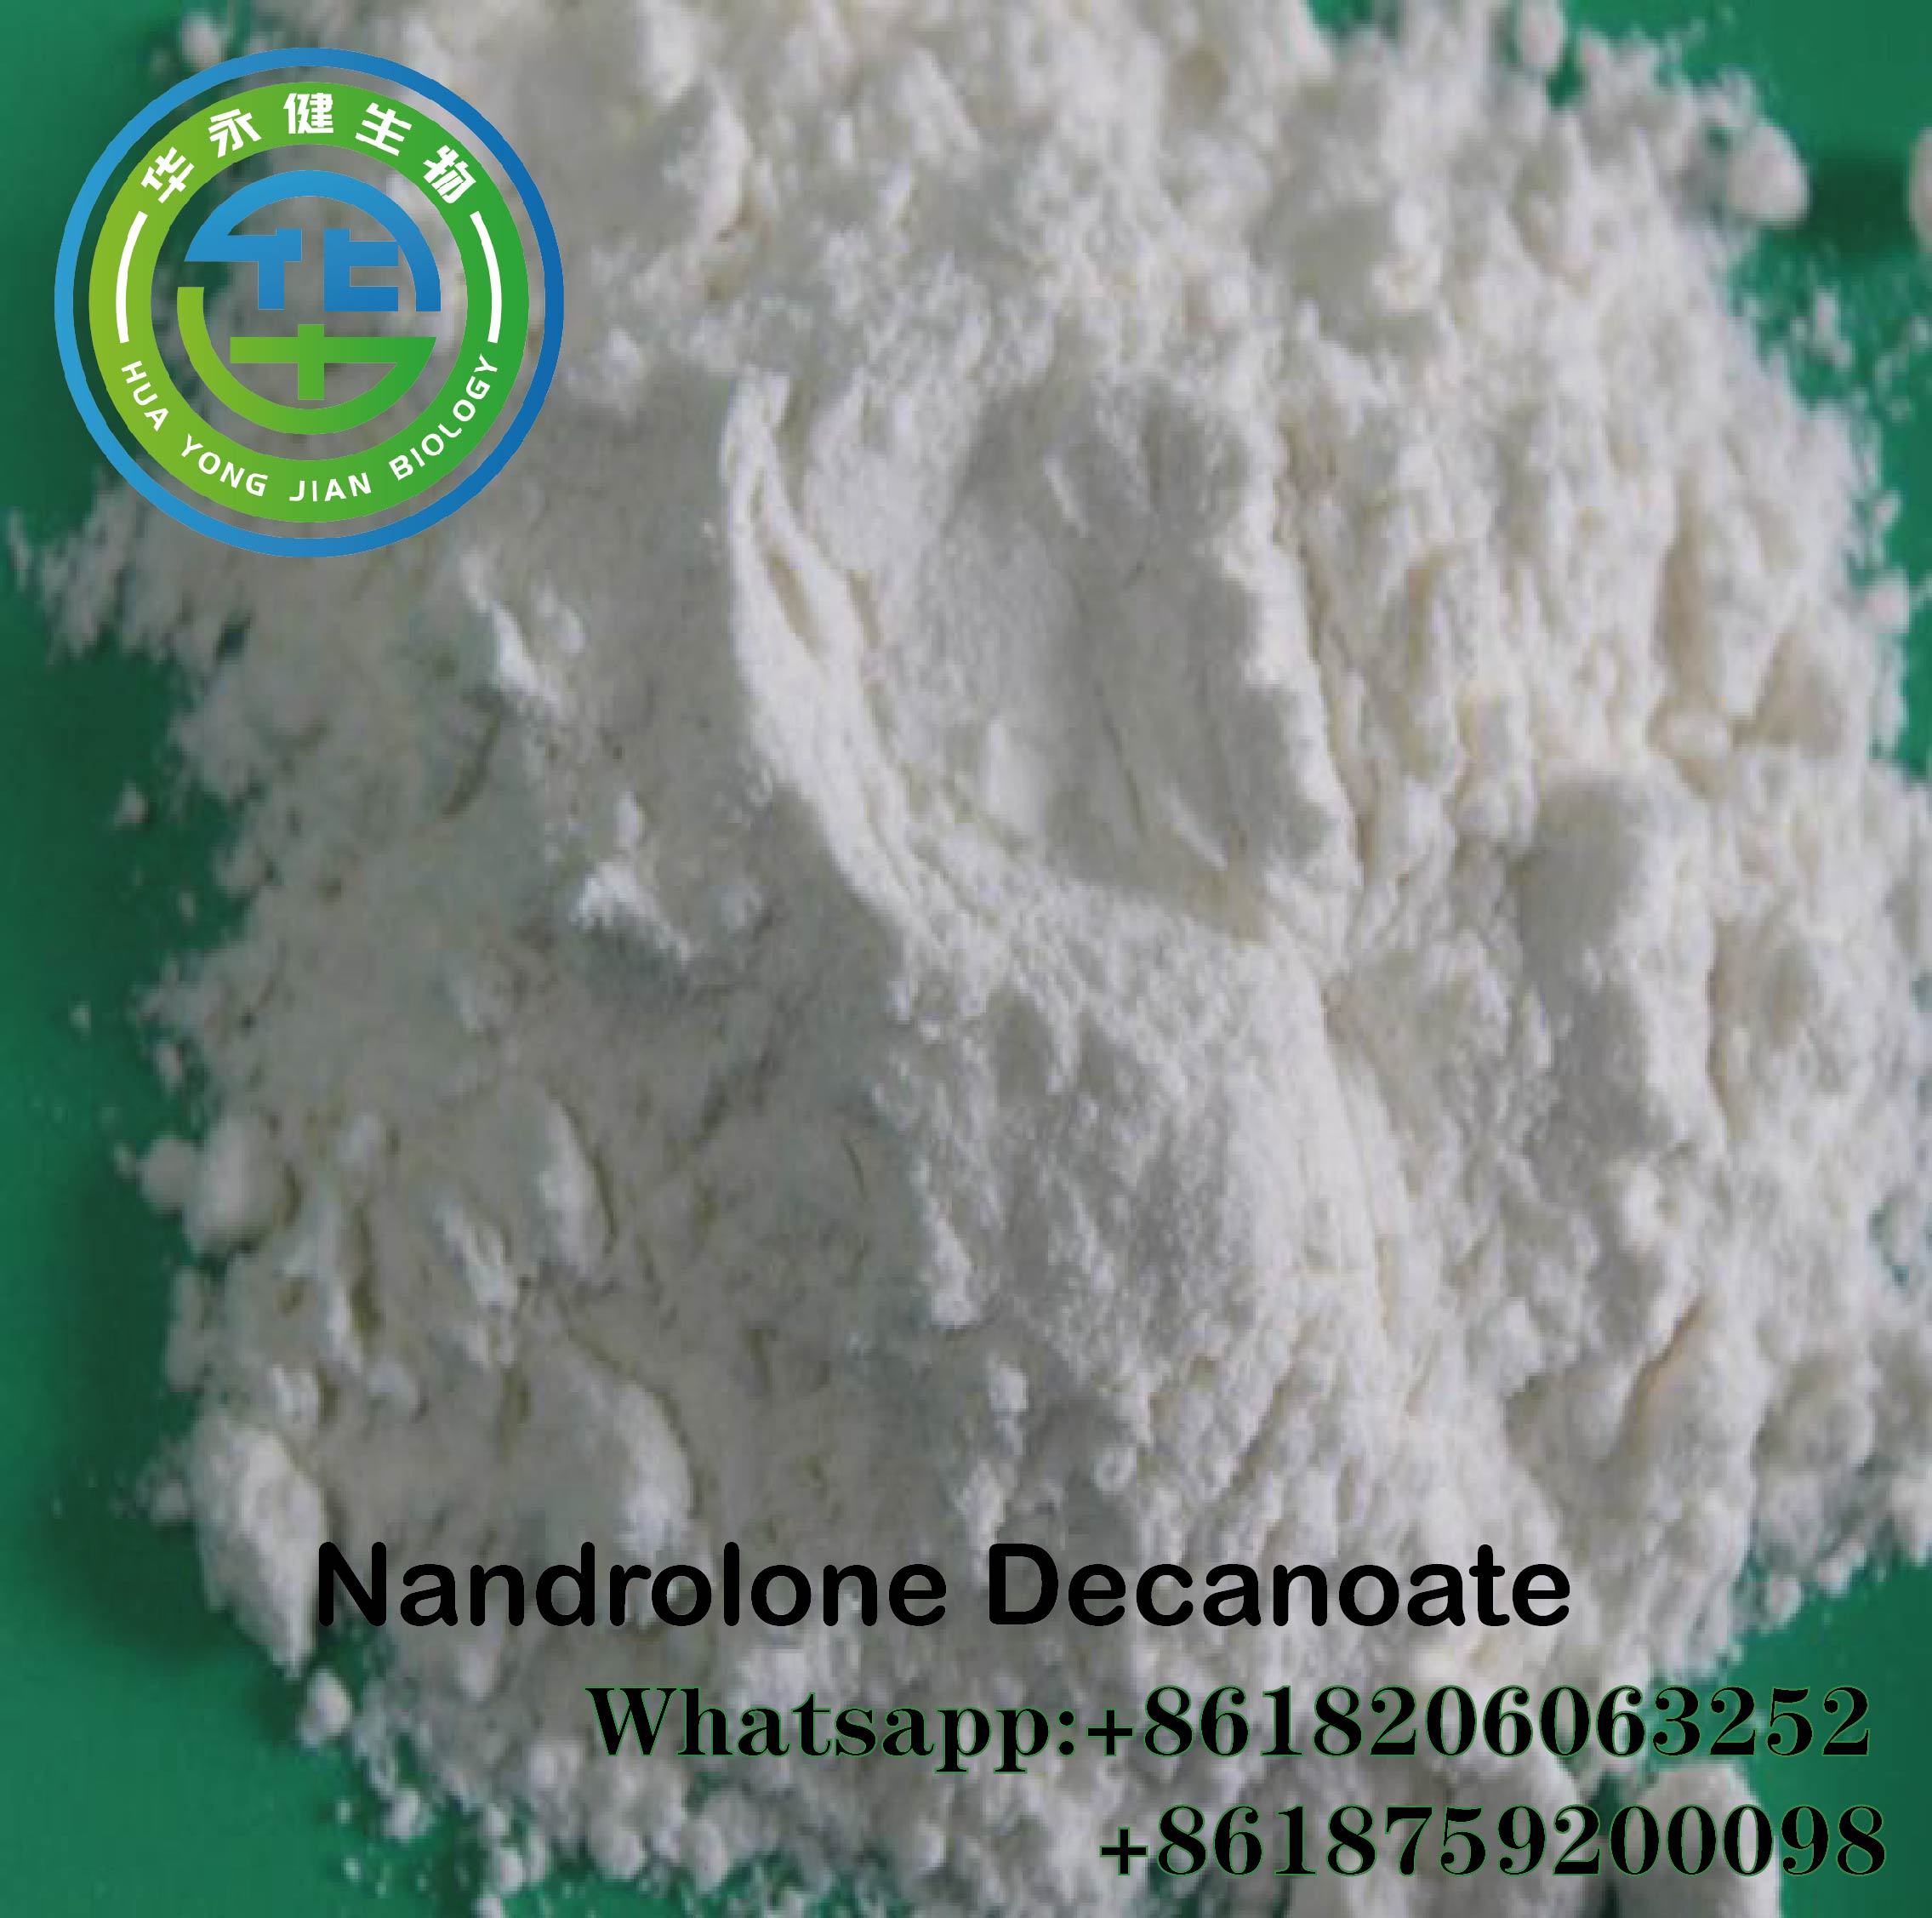 Darobolin Deca CasNO.360-70-3/DECA Anabolic Steroids Nandrolone Decanoate Powder 